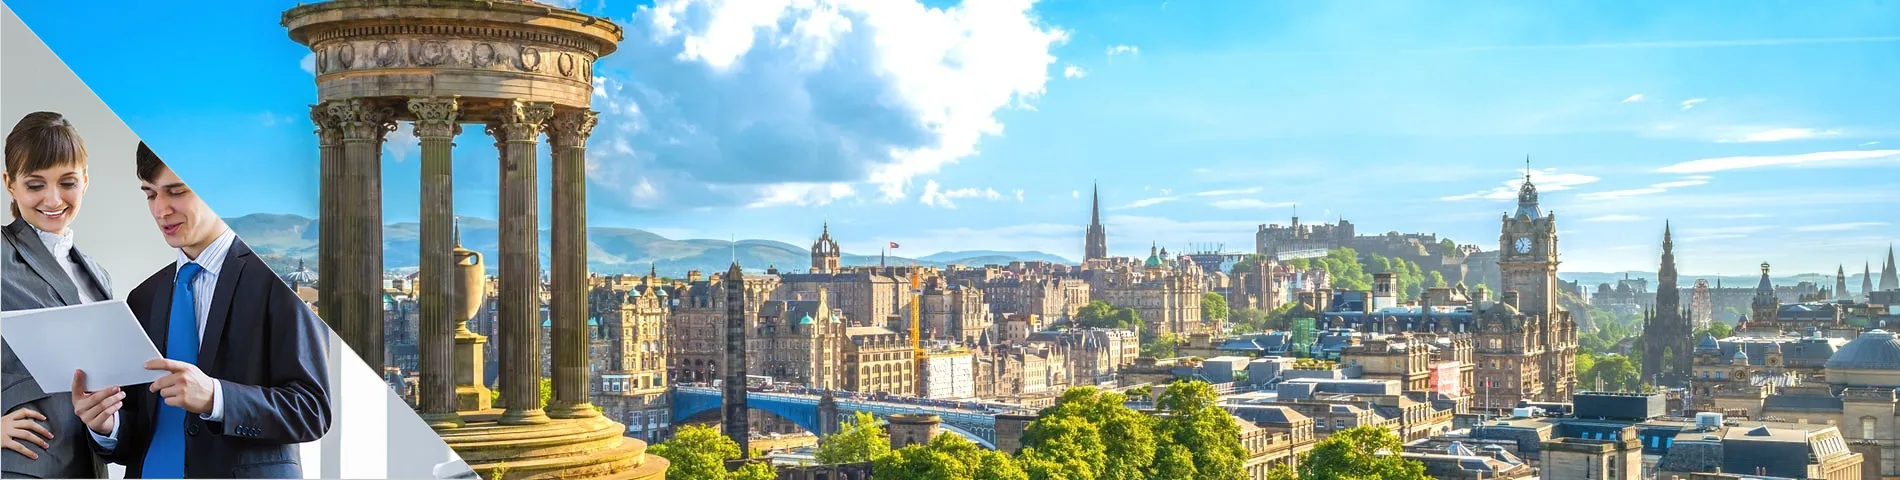 Edinburgh - Business One-to-One